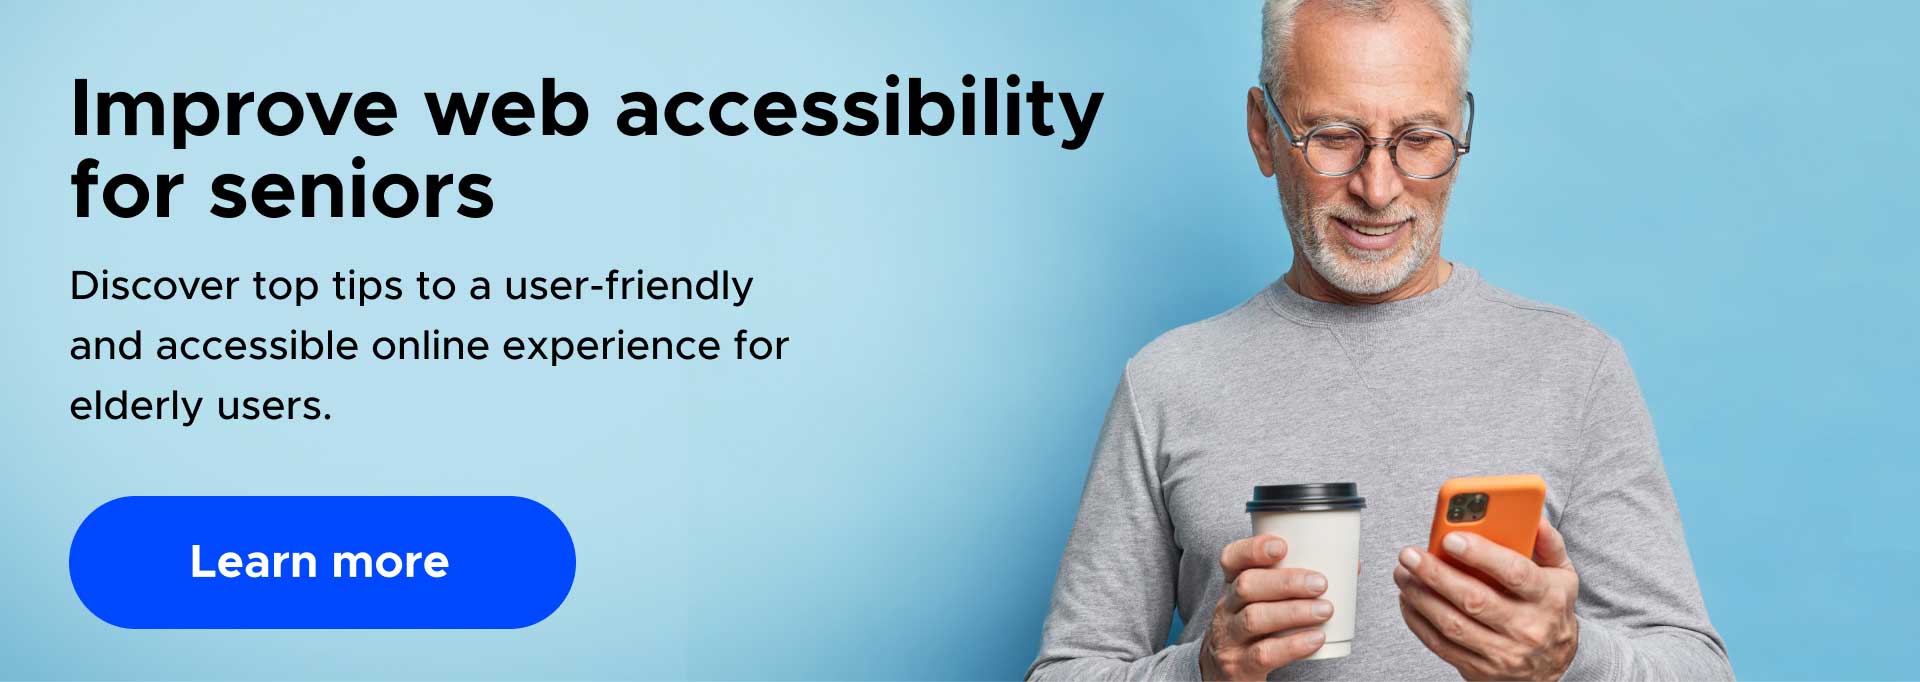 Improve web accessibility for seniors